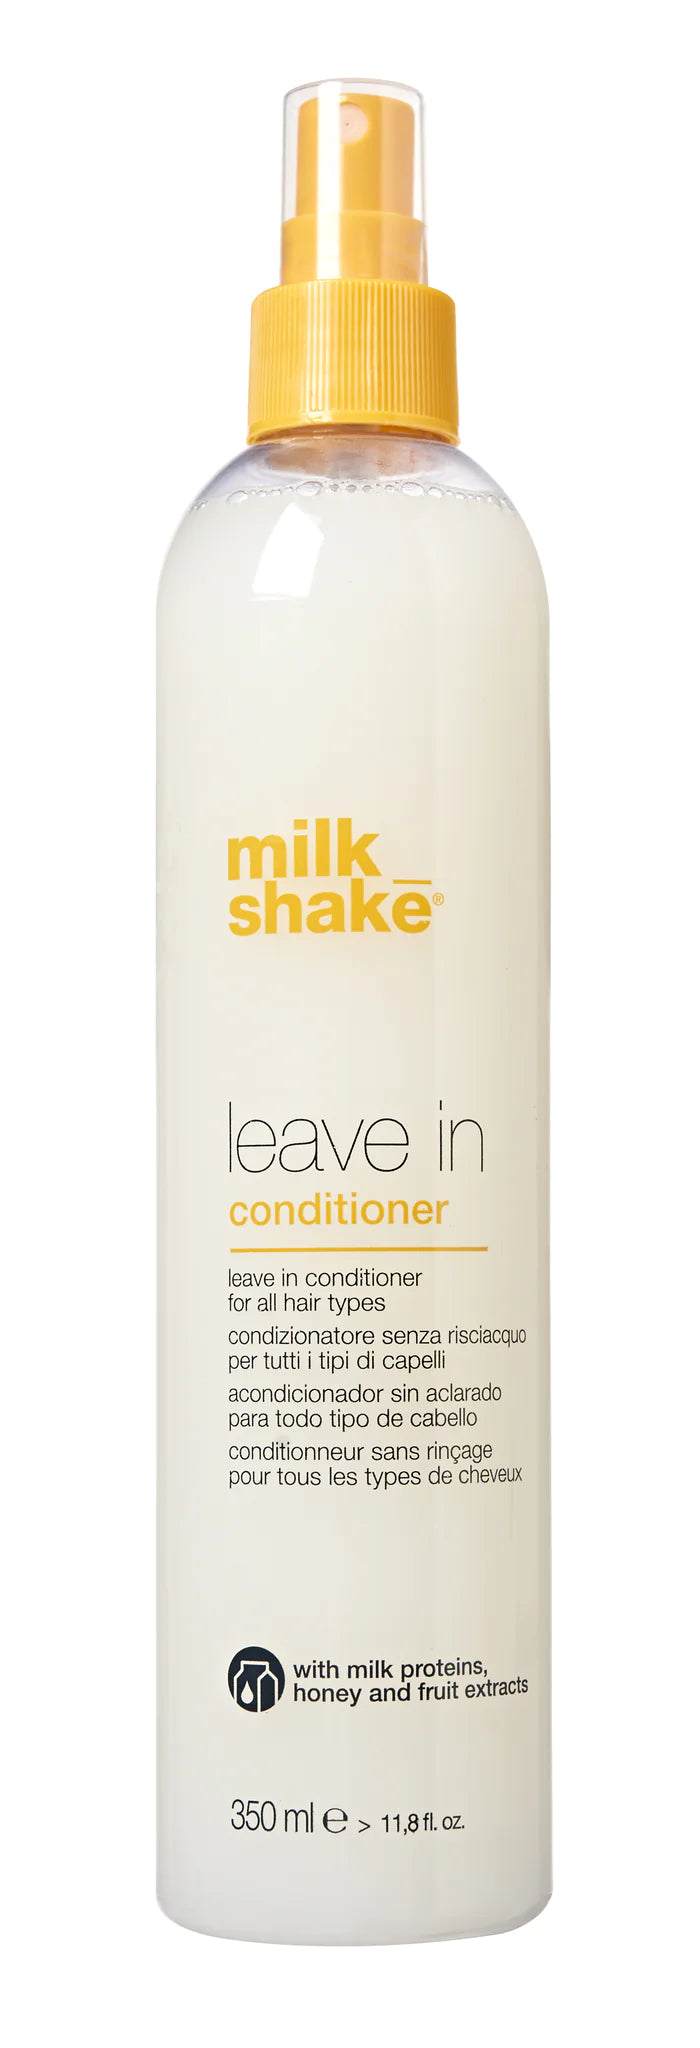 Milkshake leave in conditioner